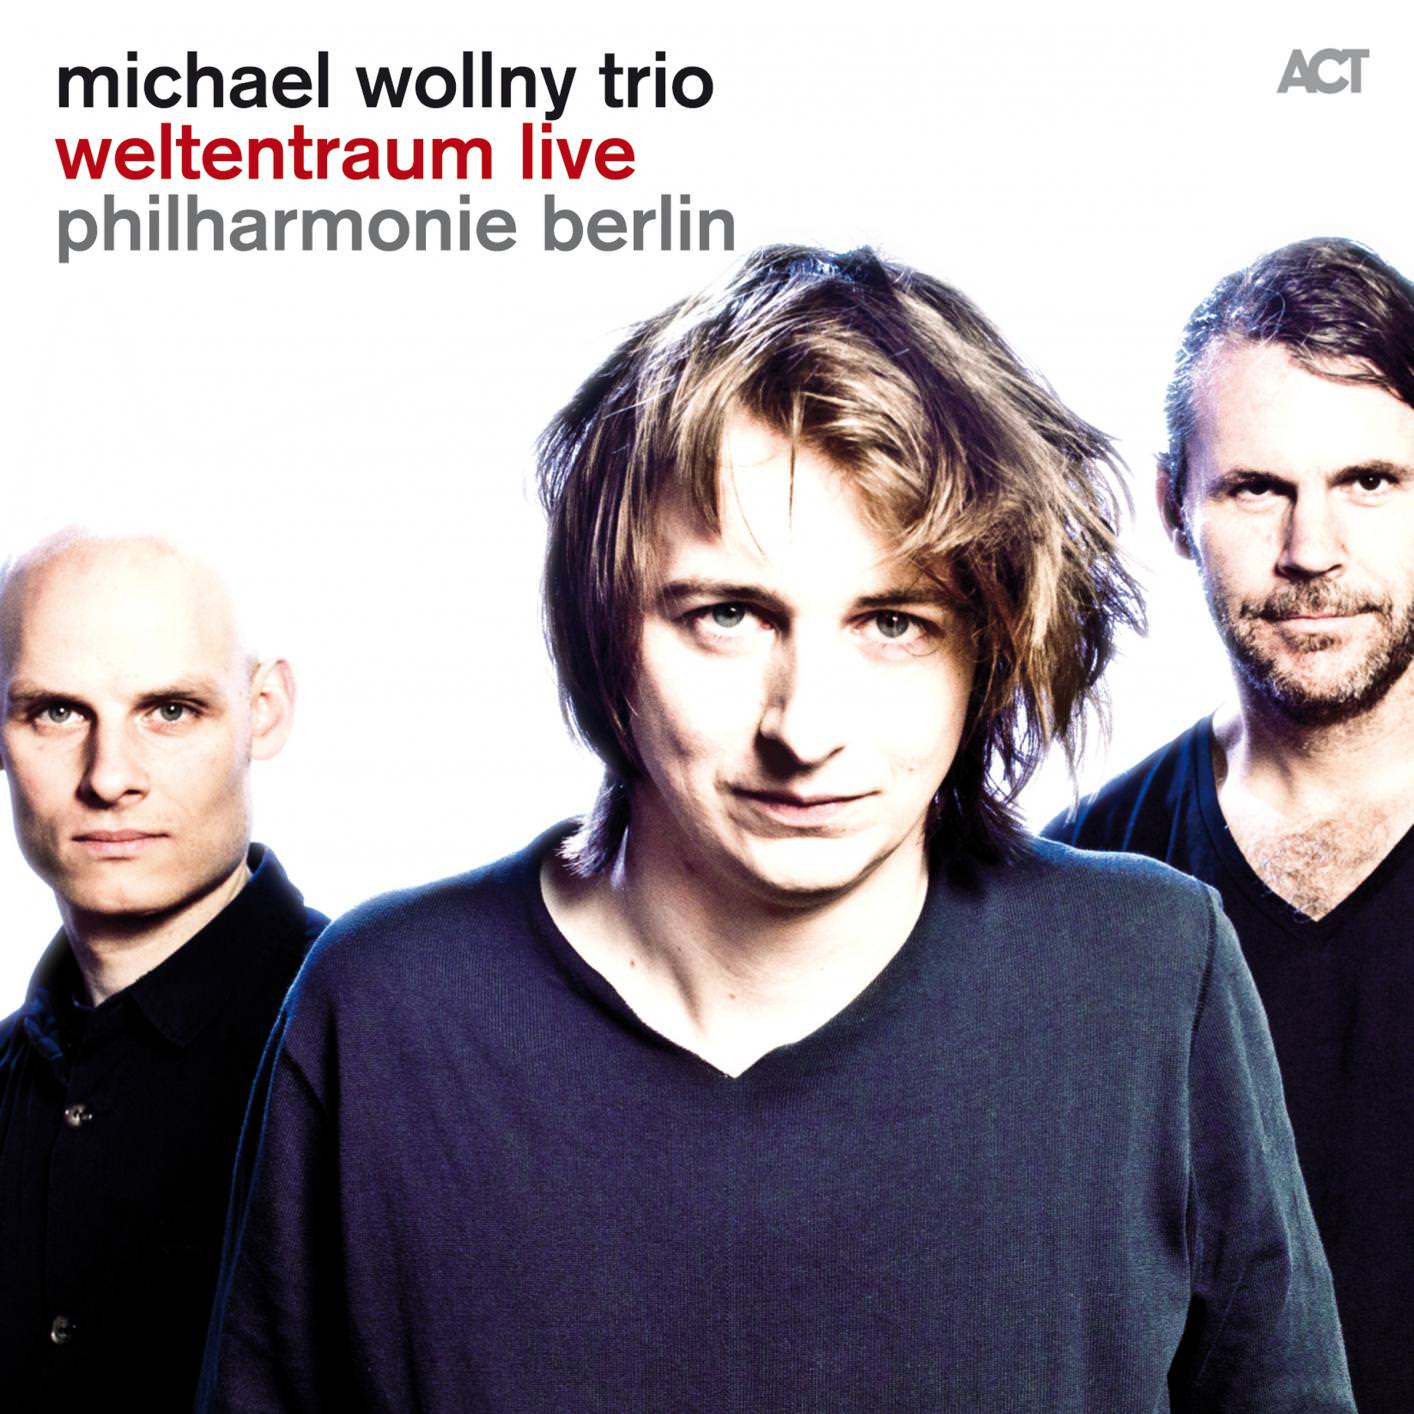 Michael Wollny Trio - Weltentraum Live (2014) [ProStudioMasters FLAC 24bit/96kHz]